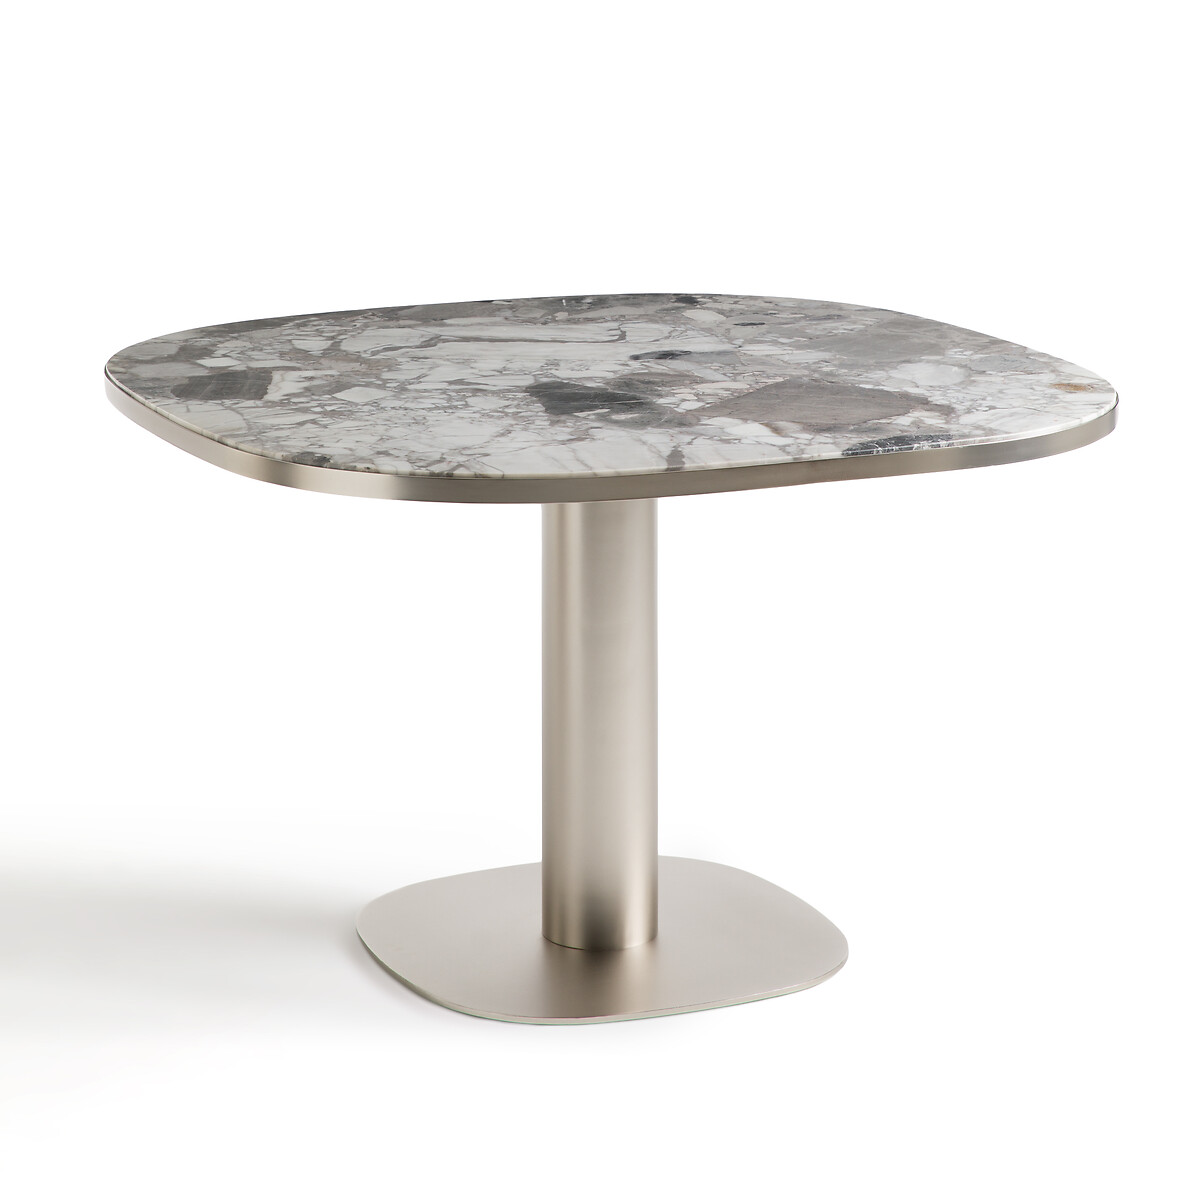 Стол обеденный из серого мрамора Lixfeld на 6 персон серый стол обеденный из серого мрамора lixfeld на 6 персон серый